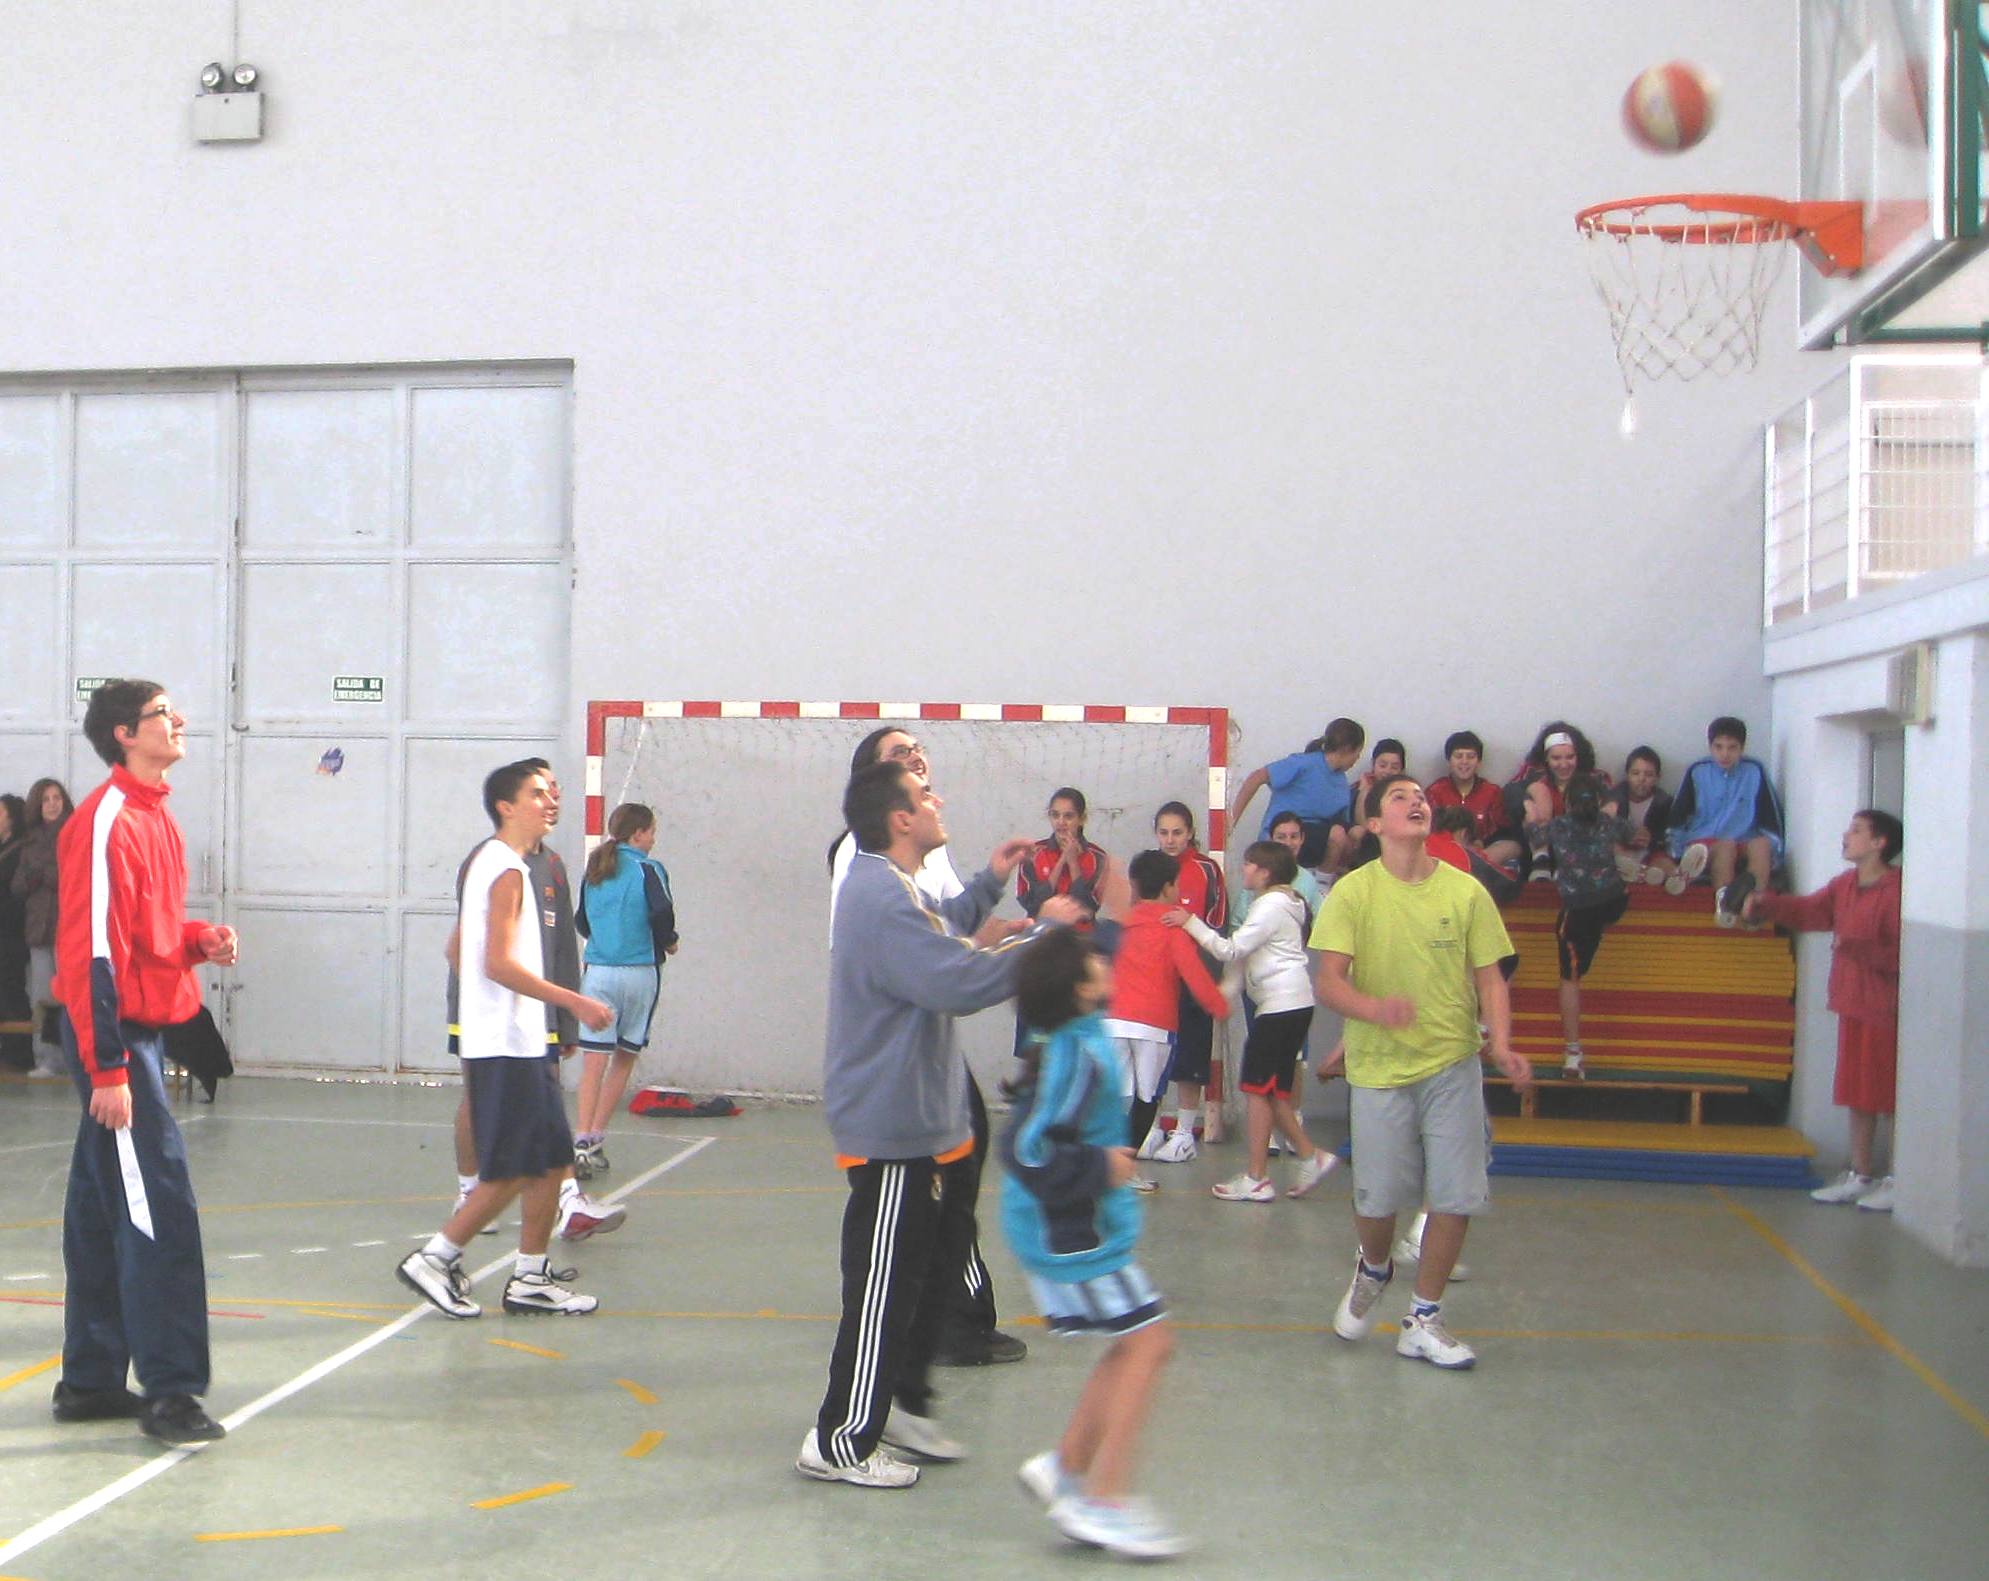 Momento de un mini partido de baloncesto con deportistas en accion